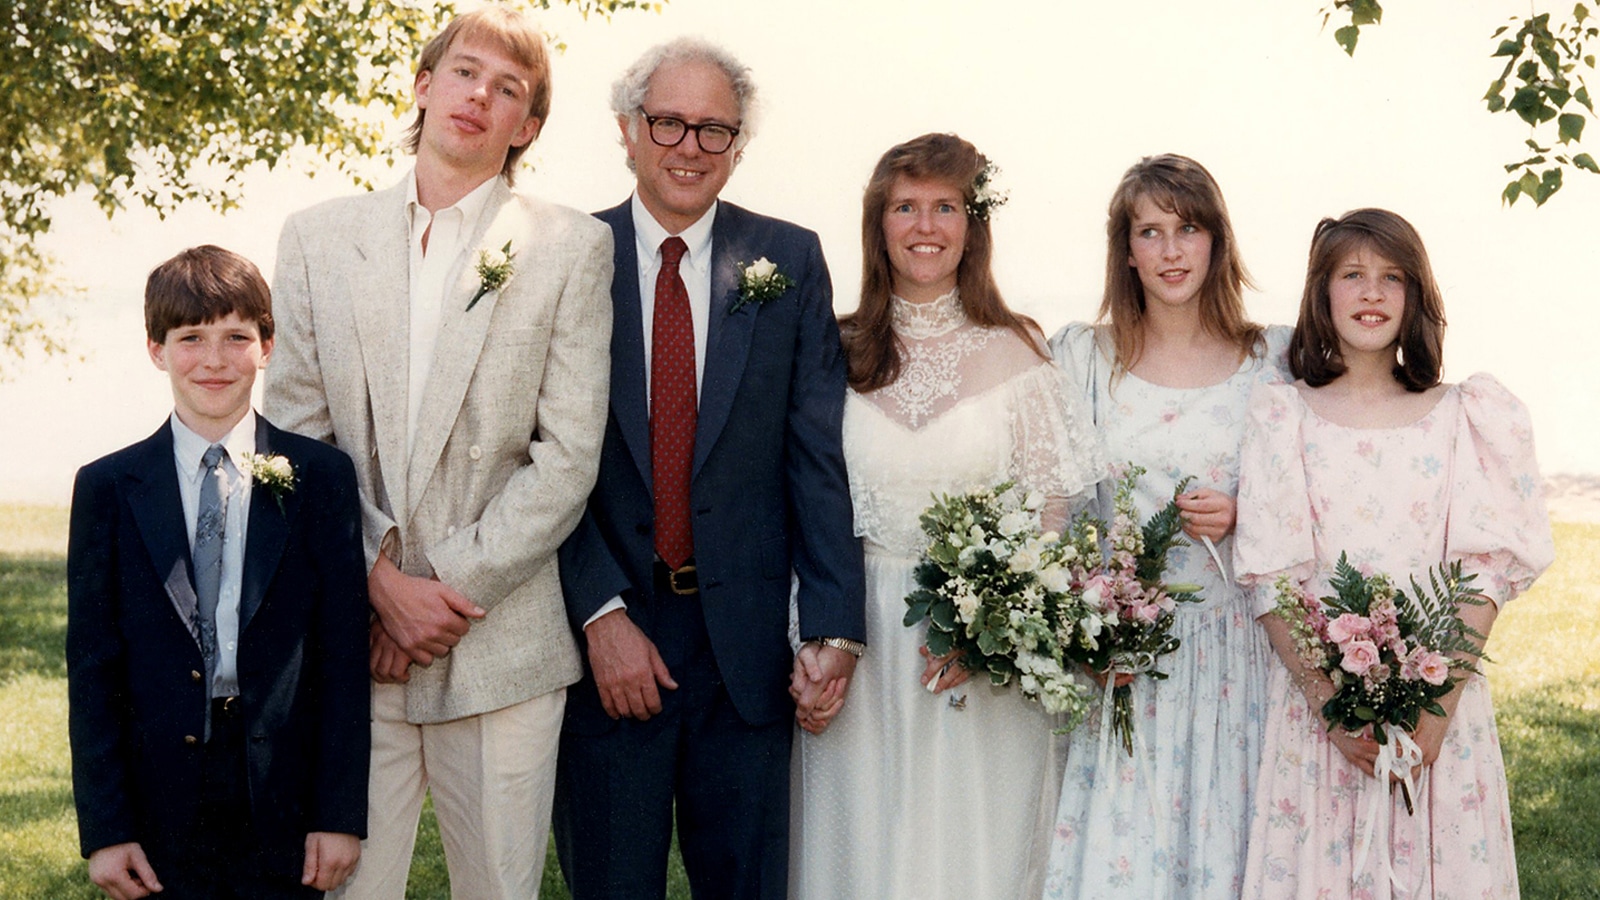 Bernie Sanders & Jane O’Meara (Driscoll) Wedding Day